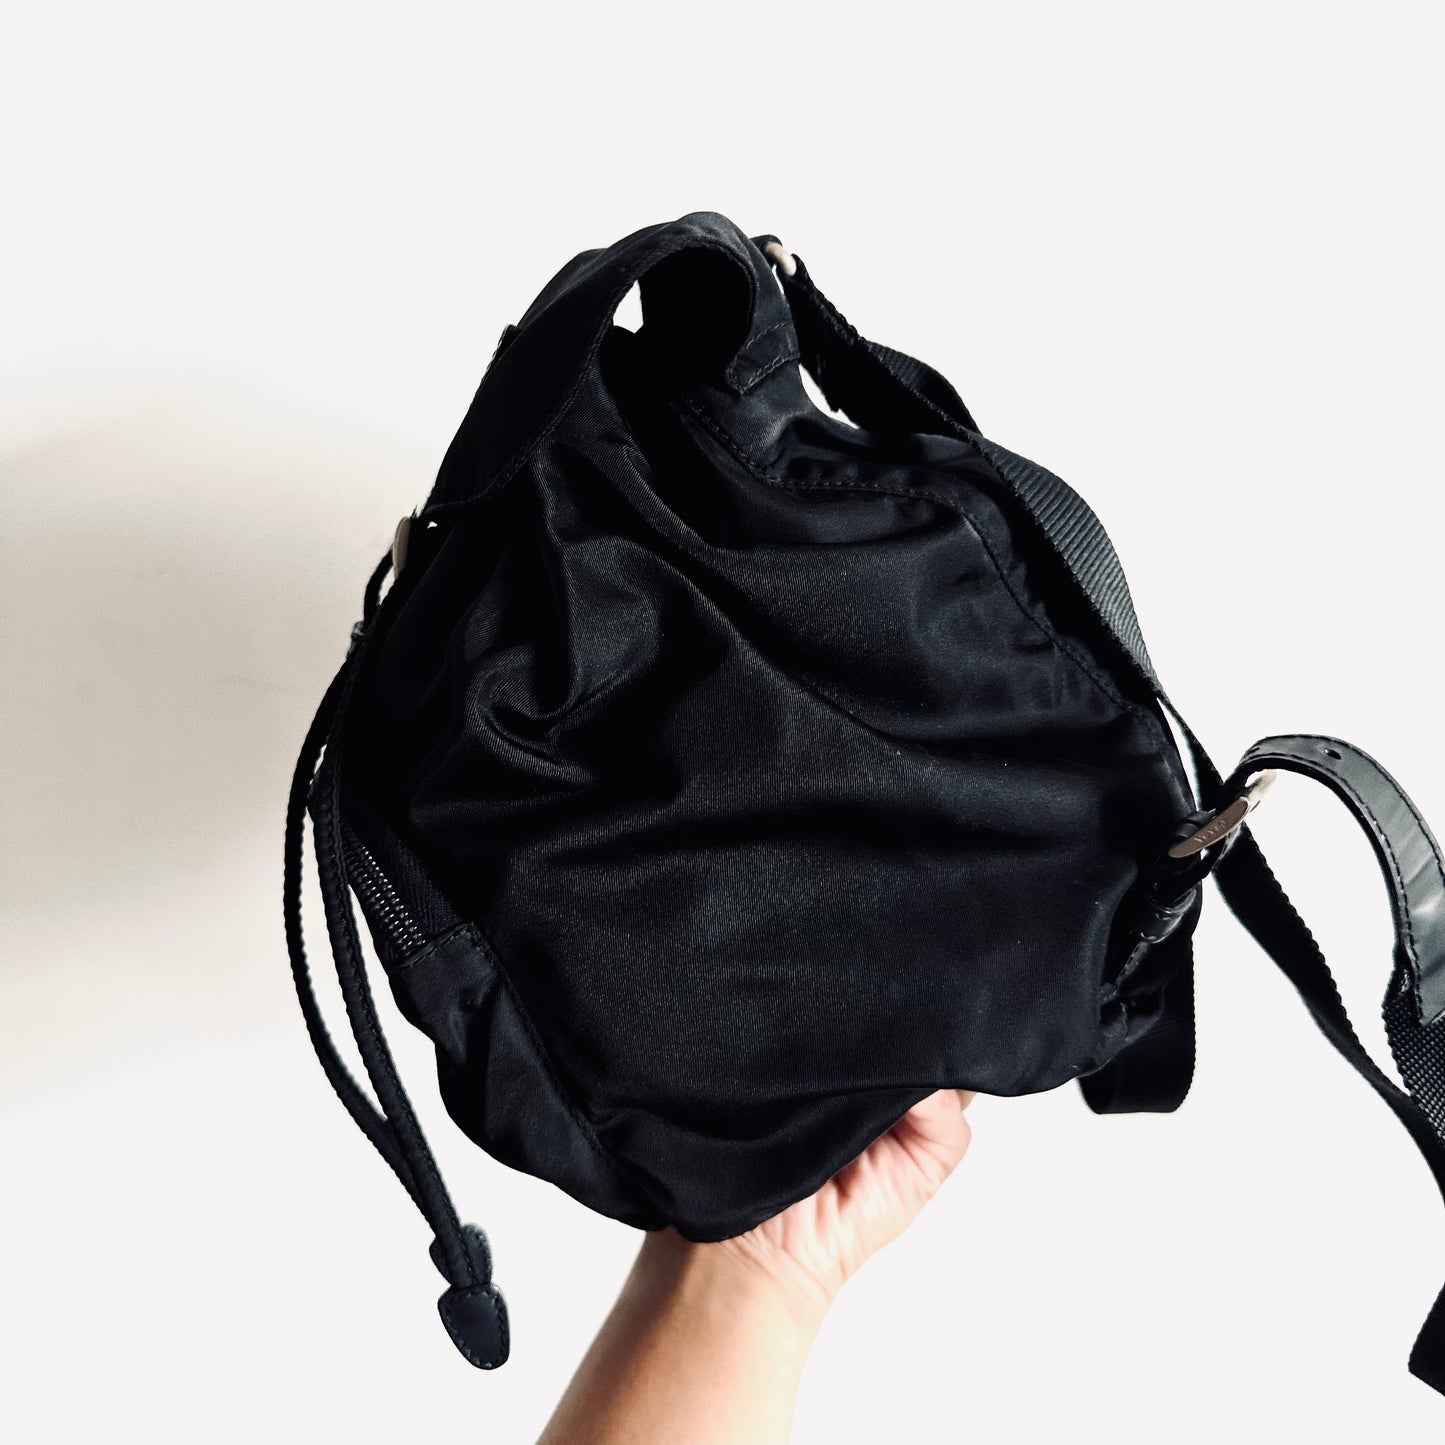 Prada Black Classic Logo Nylon & Leather Small Backpack Drawstring Bag